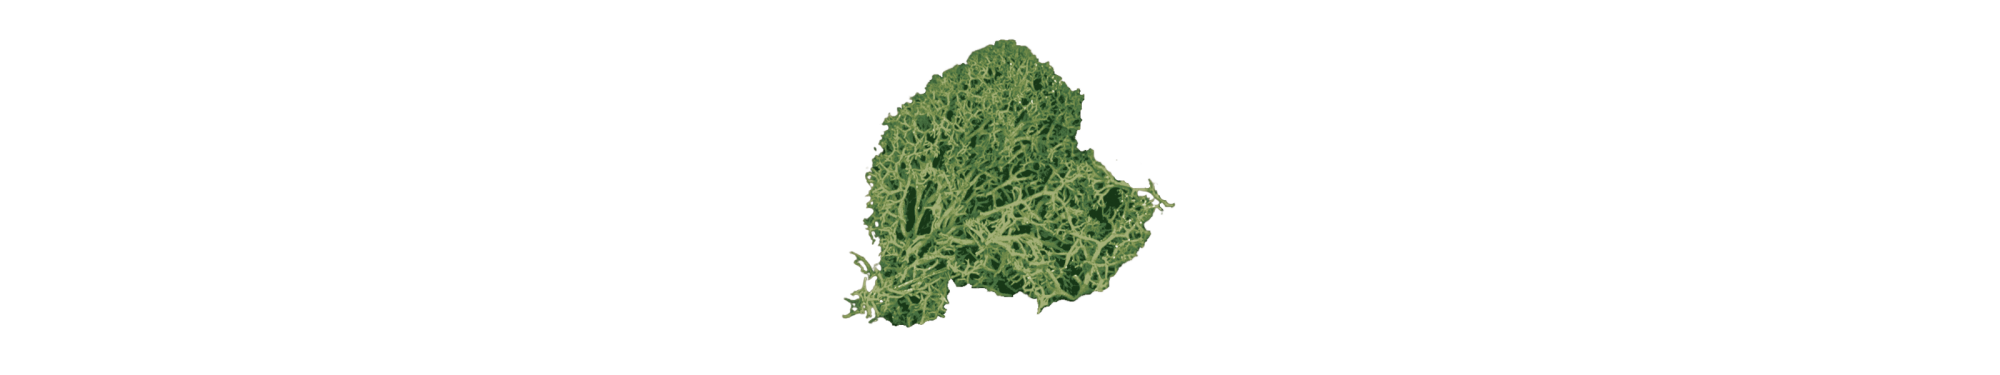 cutout of green sea moss